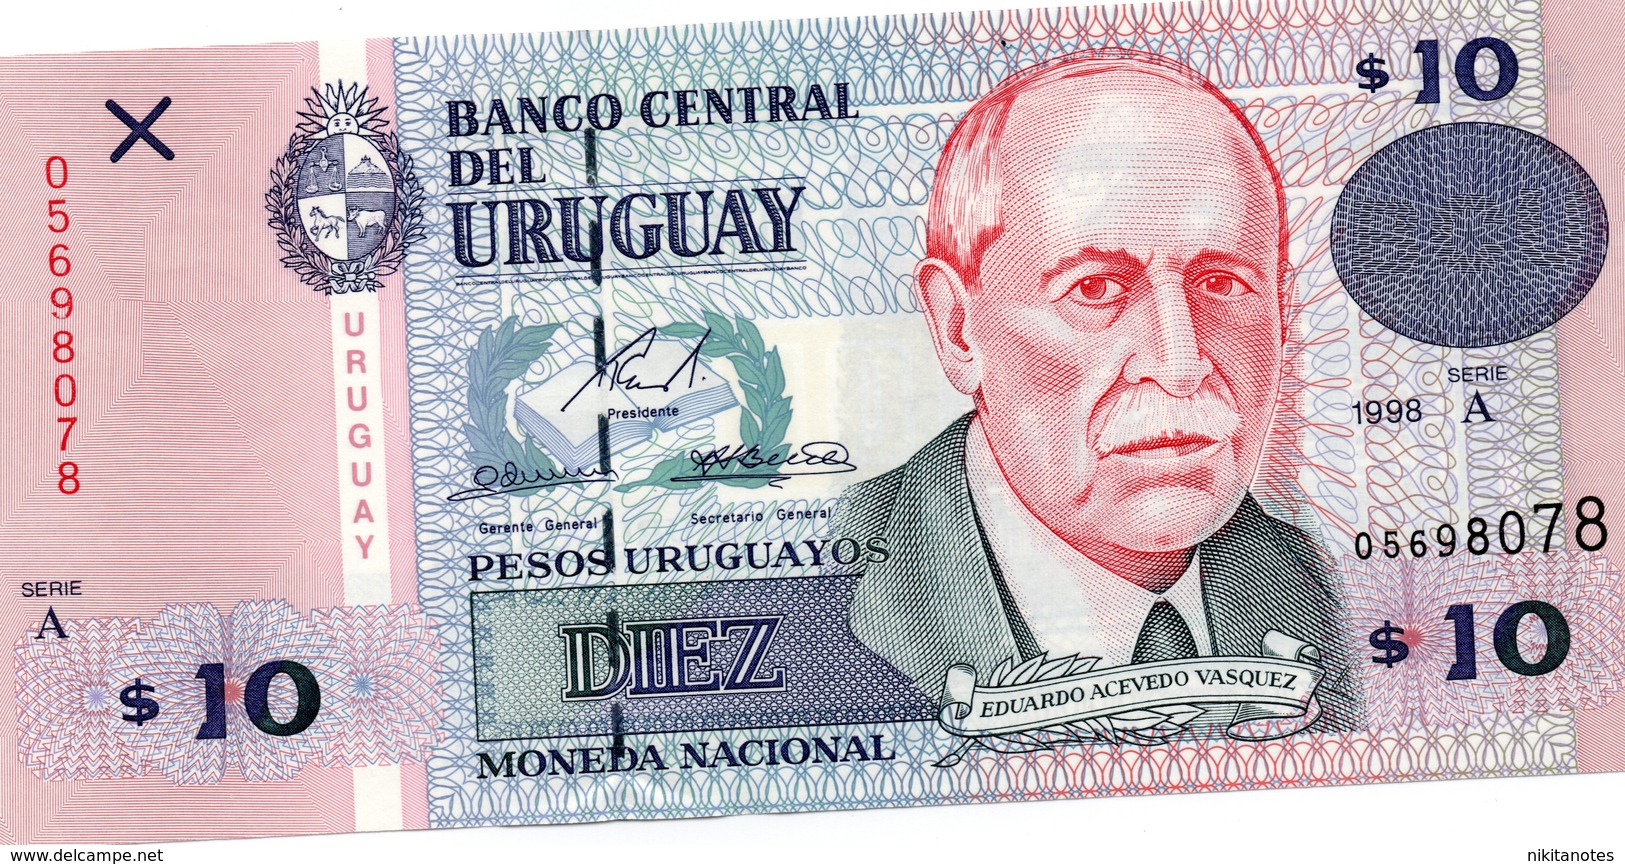 URUGUAY 10 PESOS 1998 P 81 Unc - Uruguay